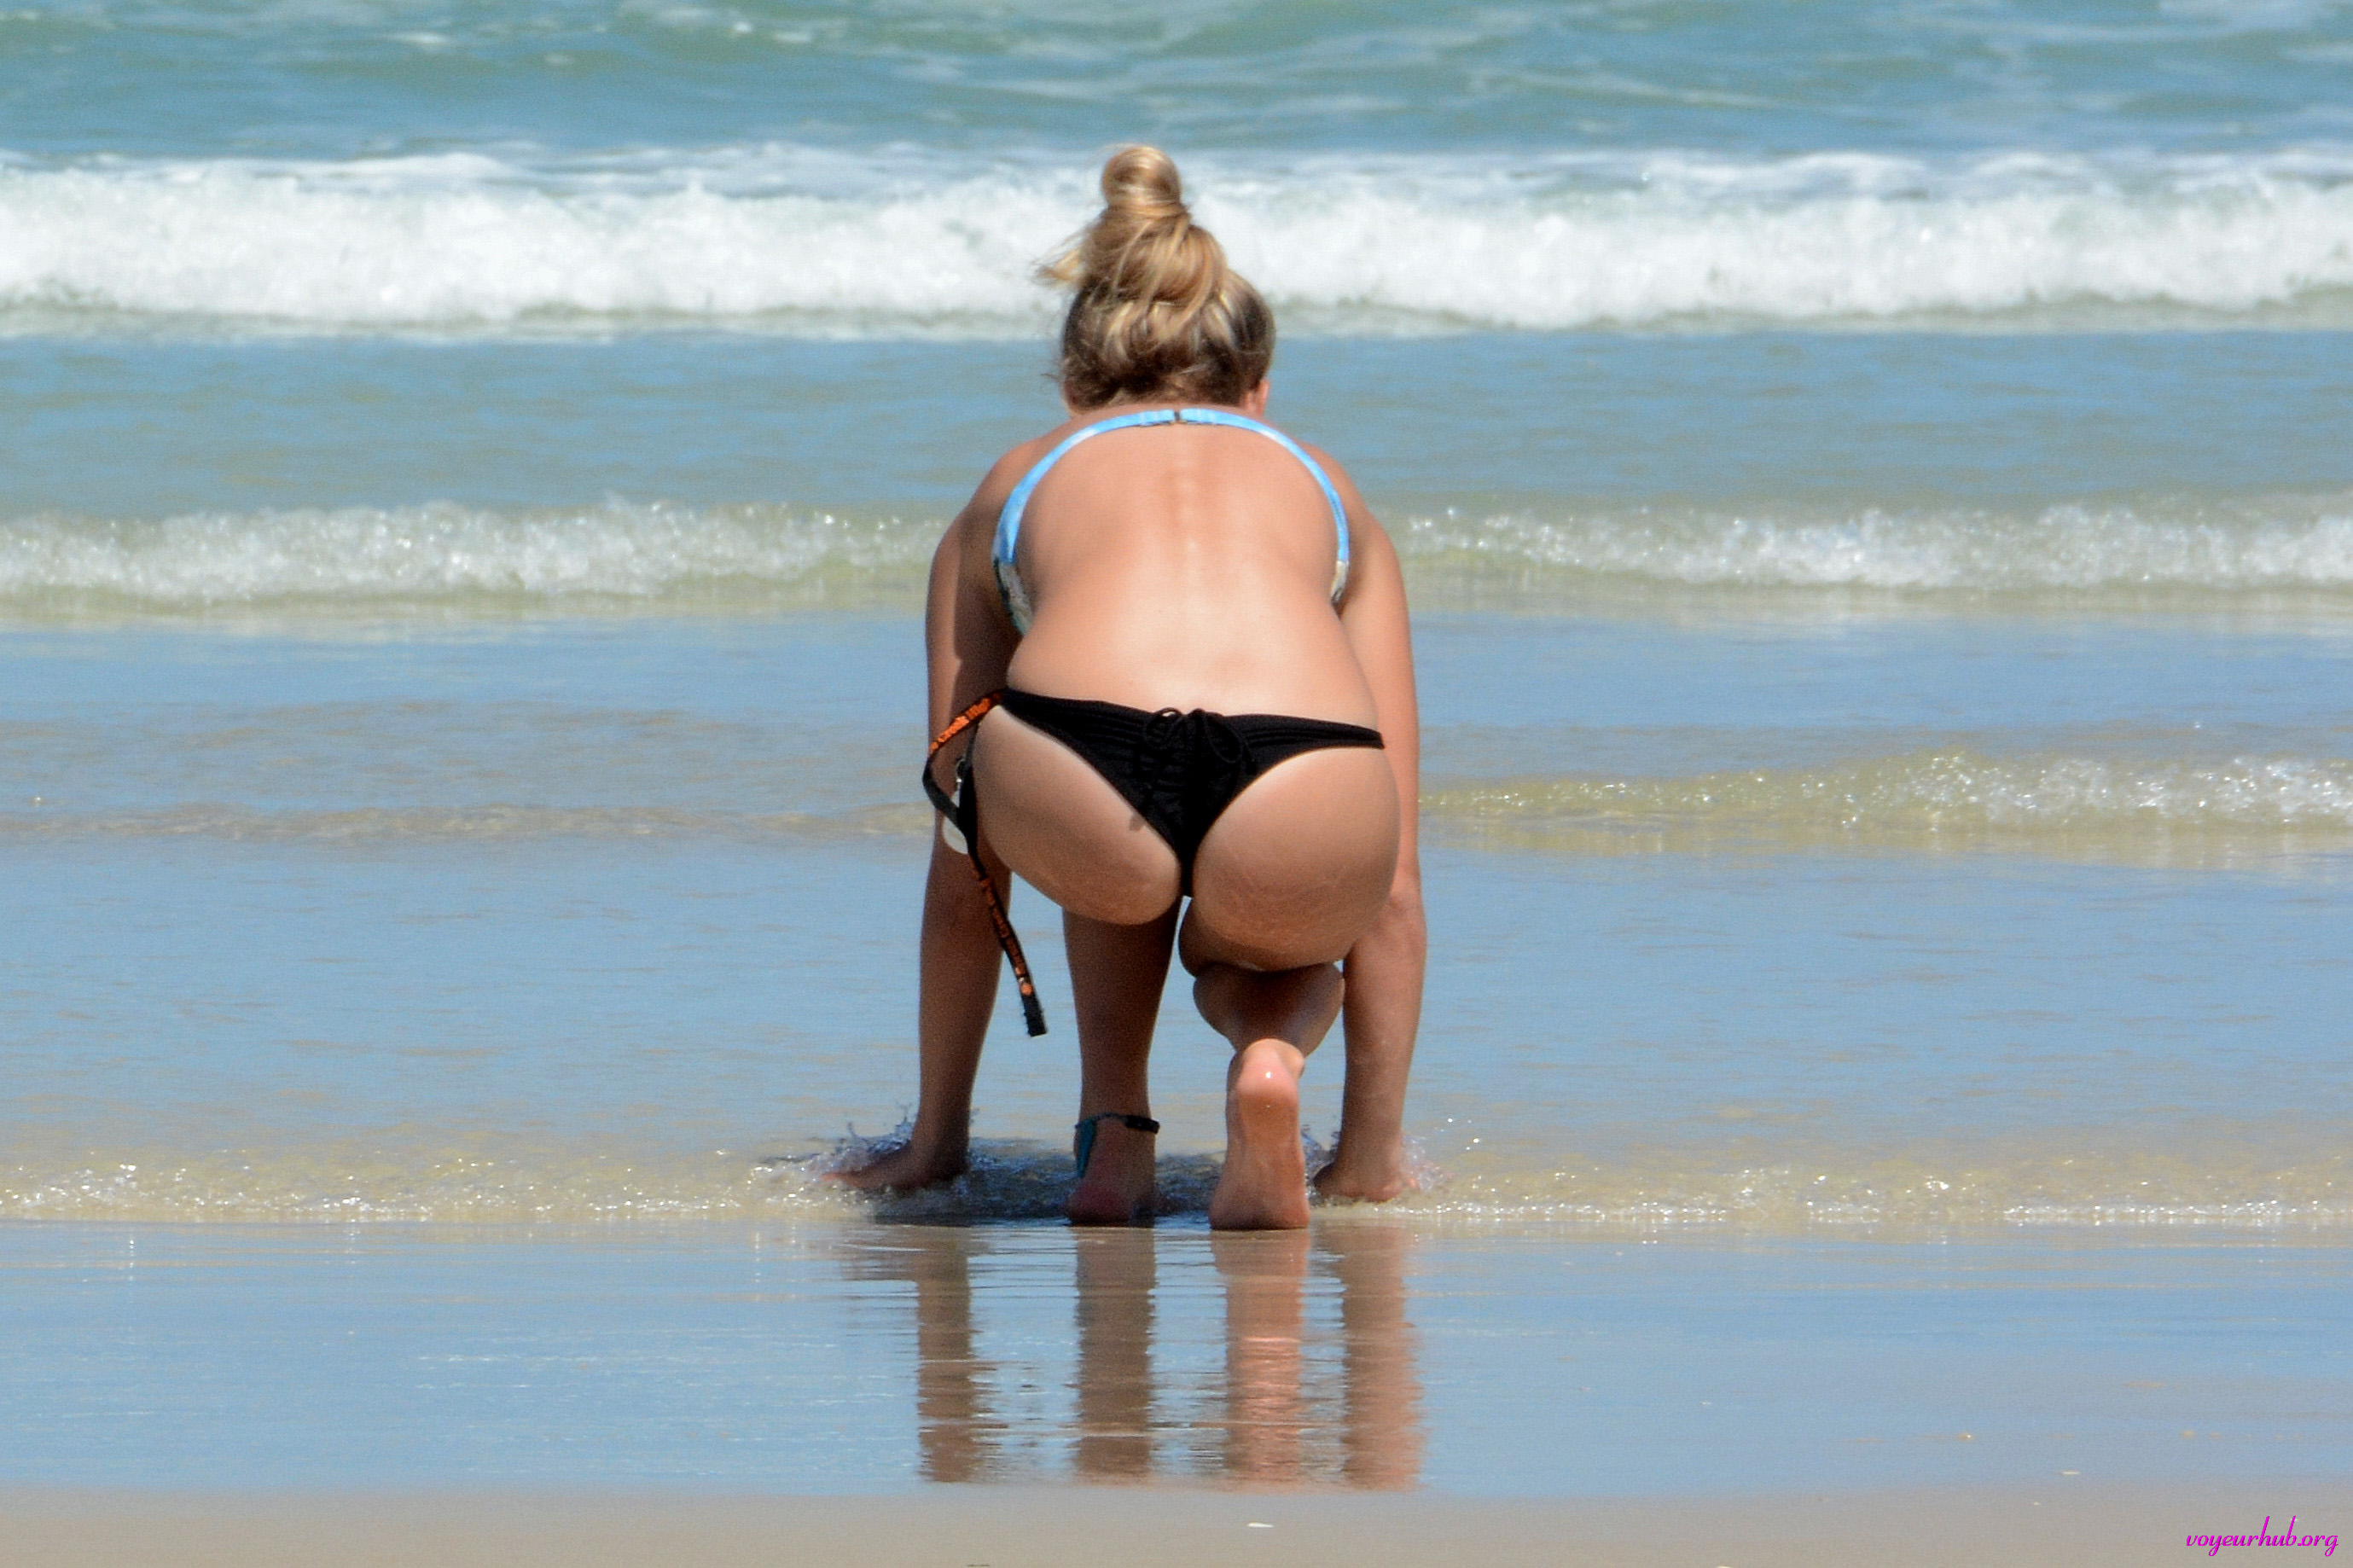 2758px x 1838px - Voyeur beach pics of girls in bikinis at Daytona beach